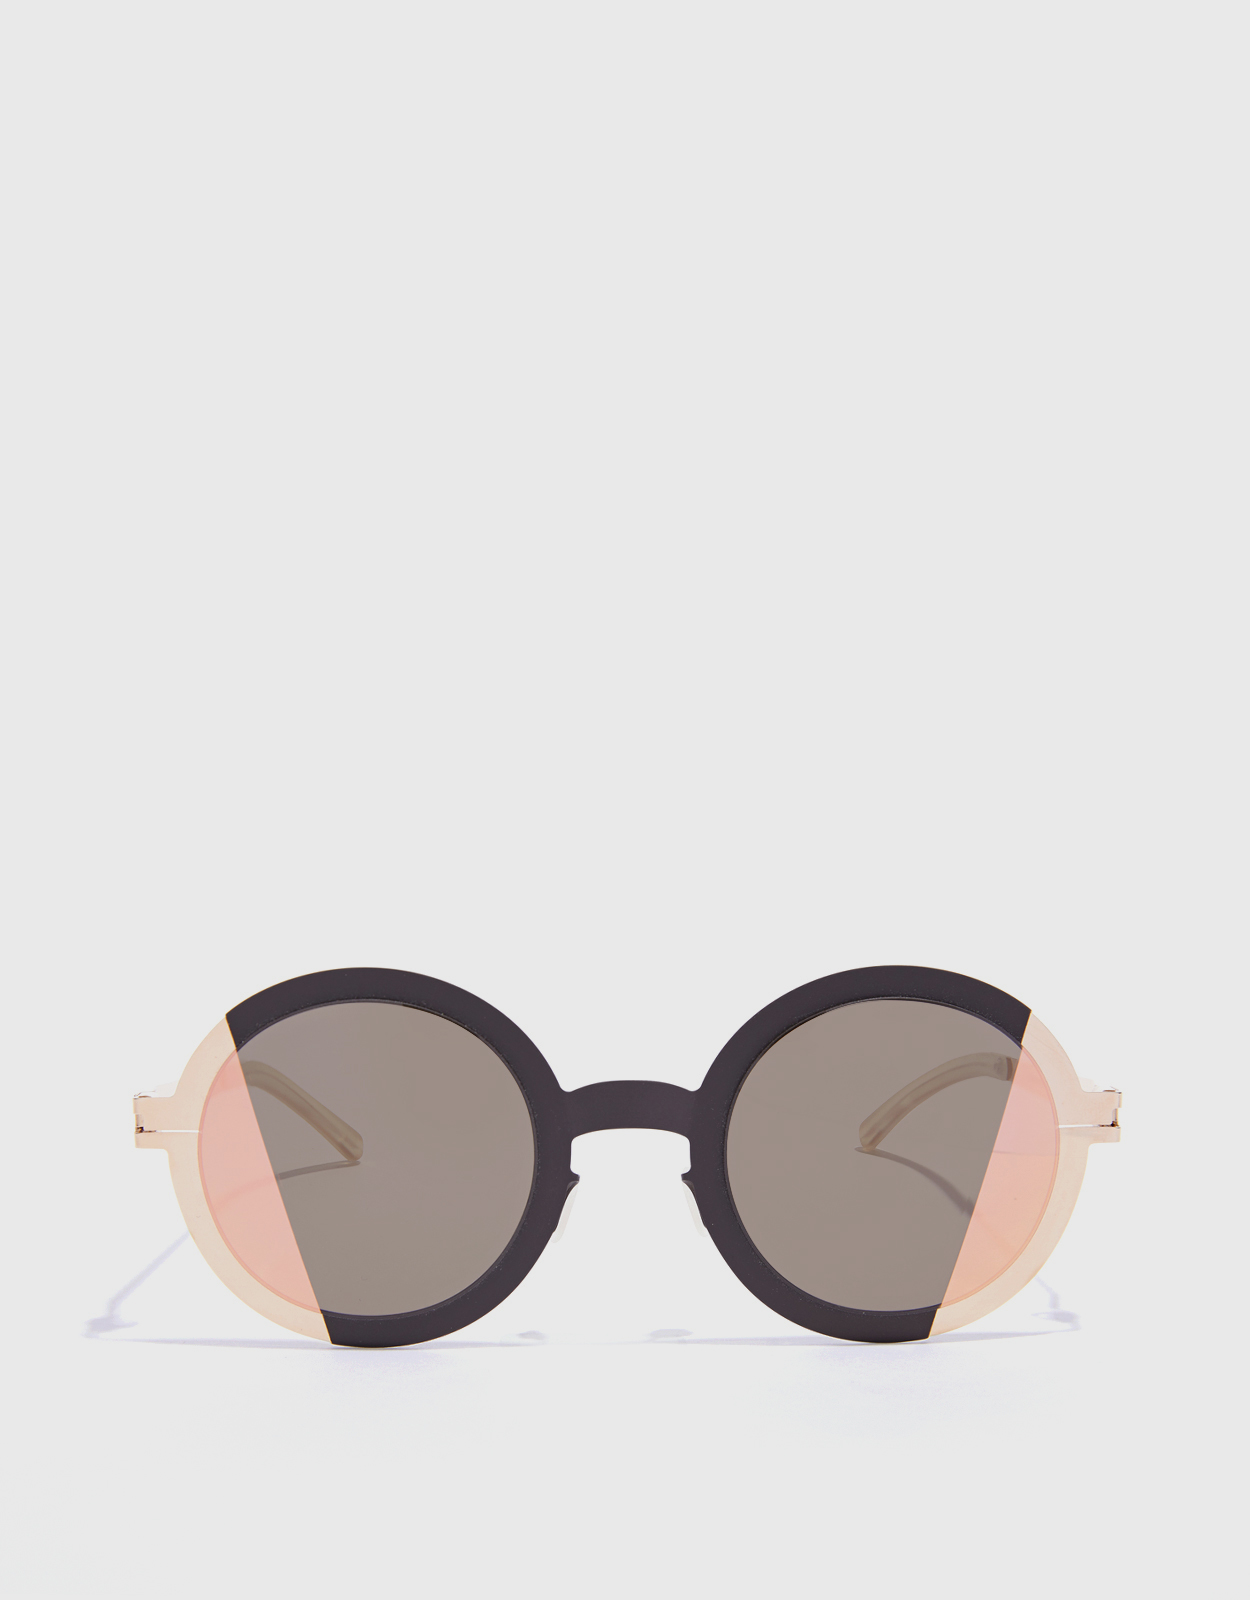 MYKITA STUDIO 2.1 Color-block Round Sunglasses (Sunglasses,Round Frame)  IFCHIC.COM